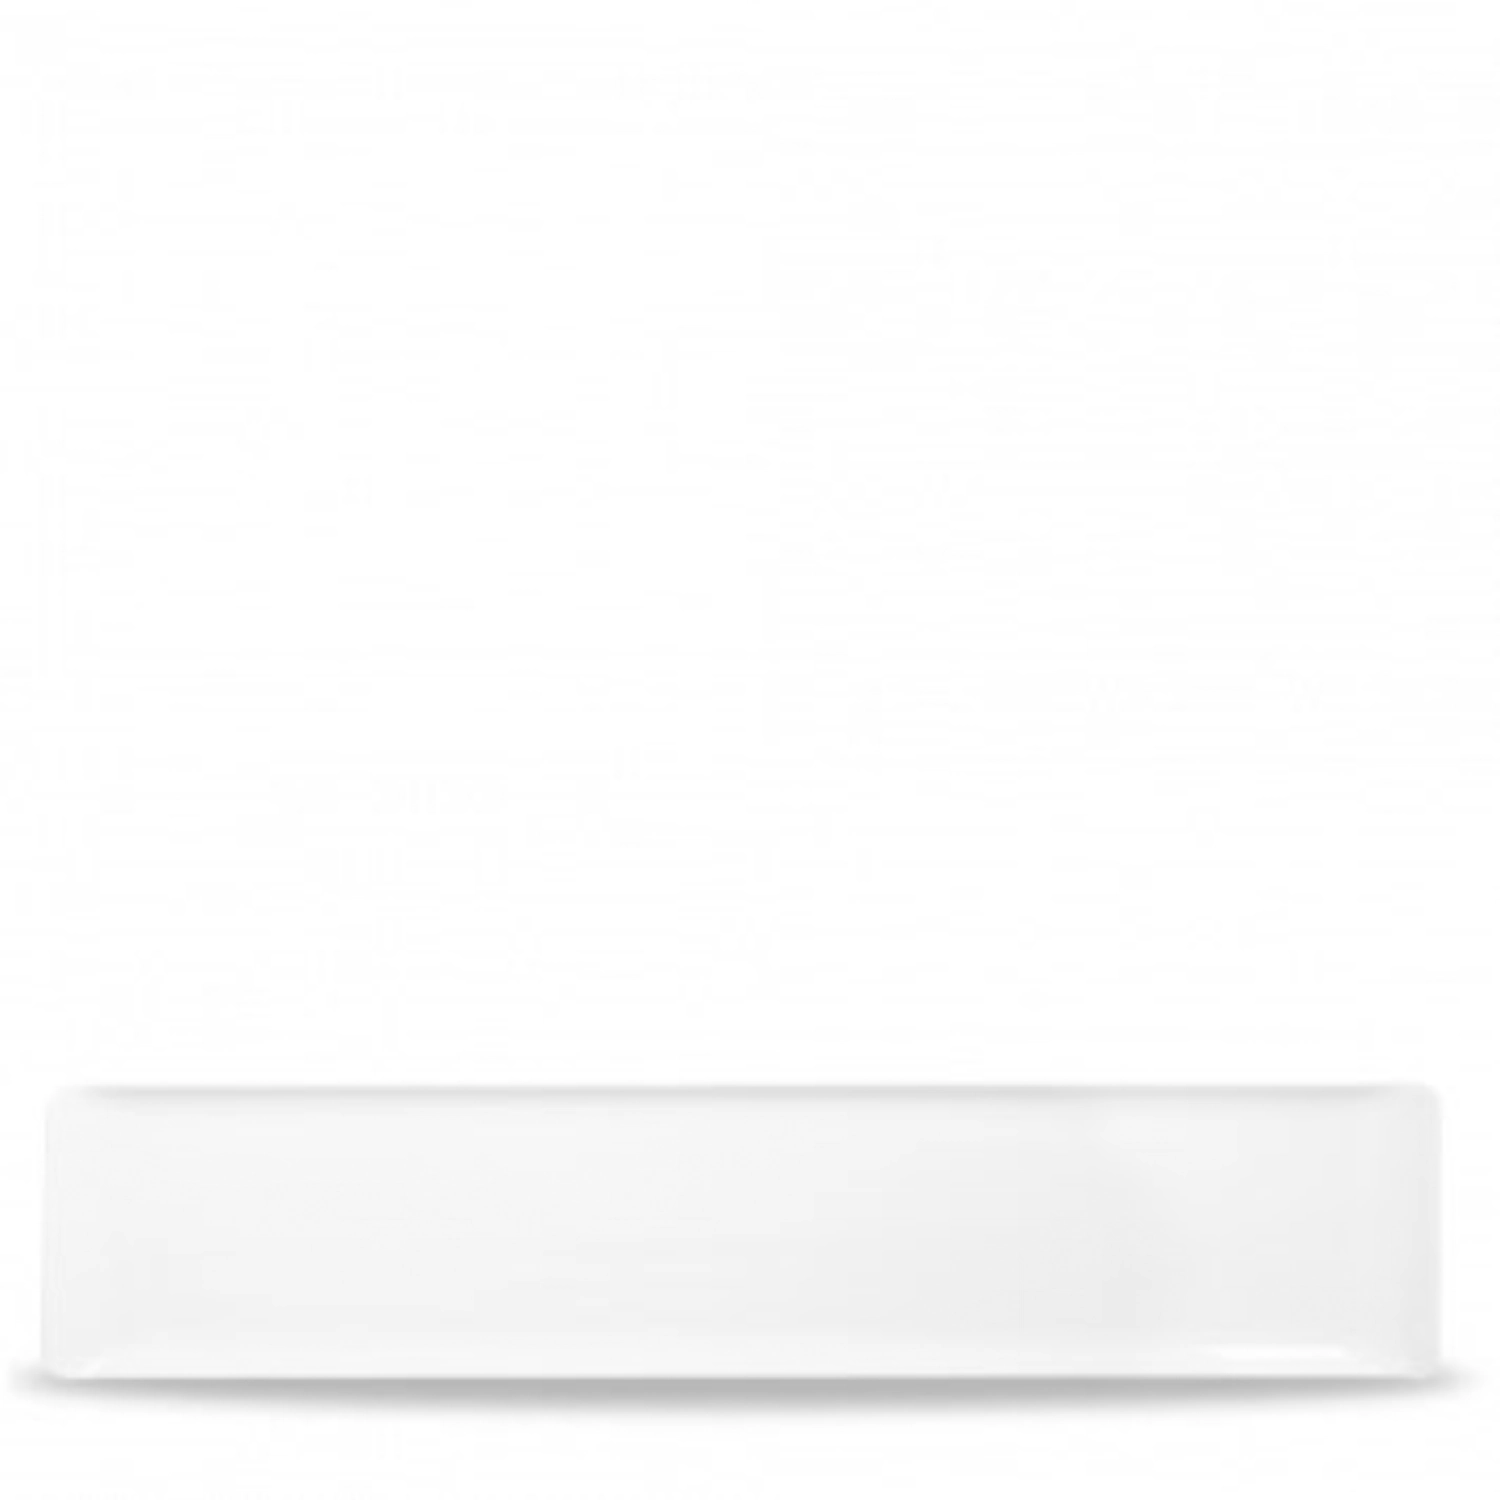 Alchmey Melamine White Buffet Tablett Rechteck 46x10cm